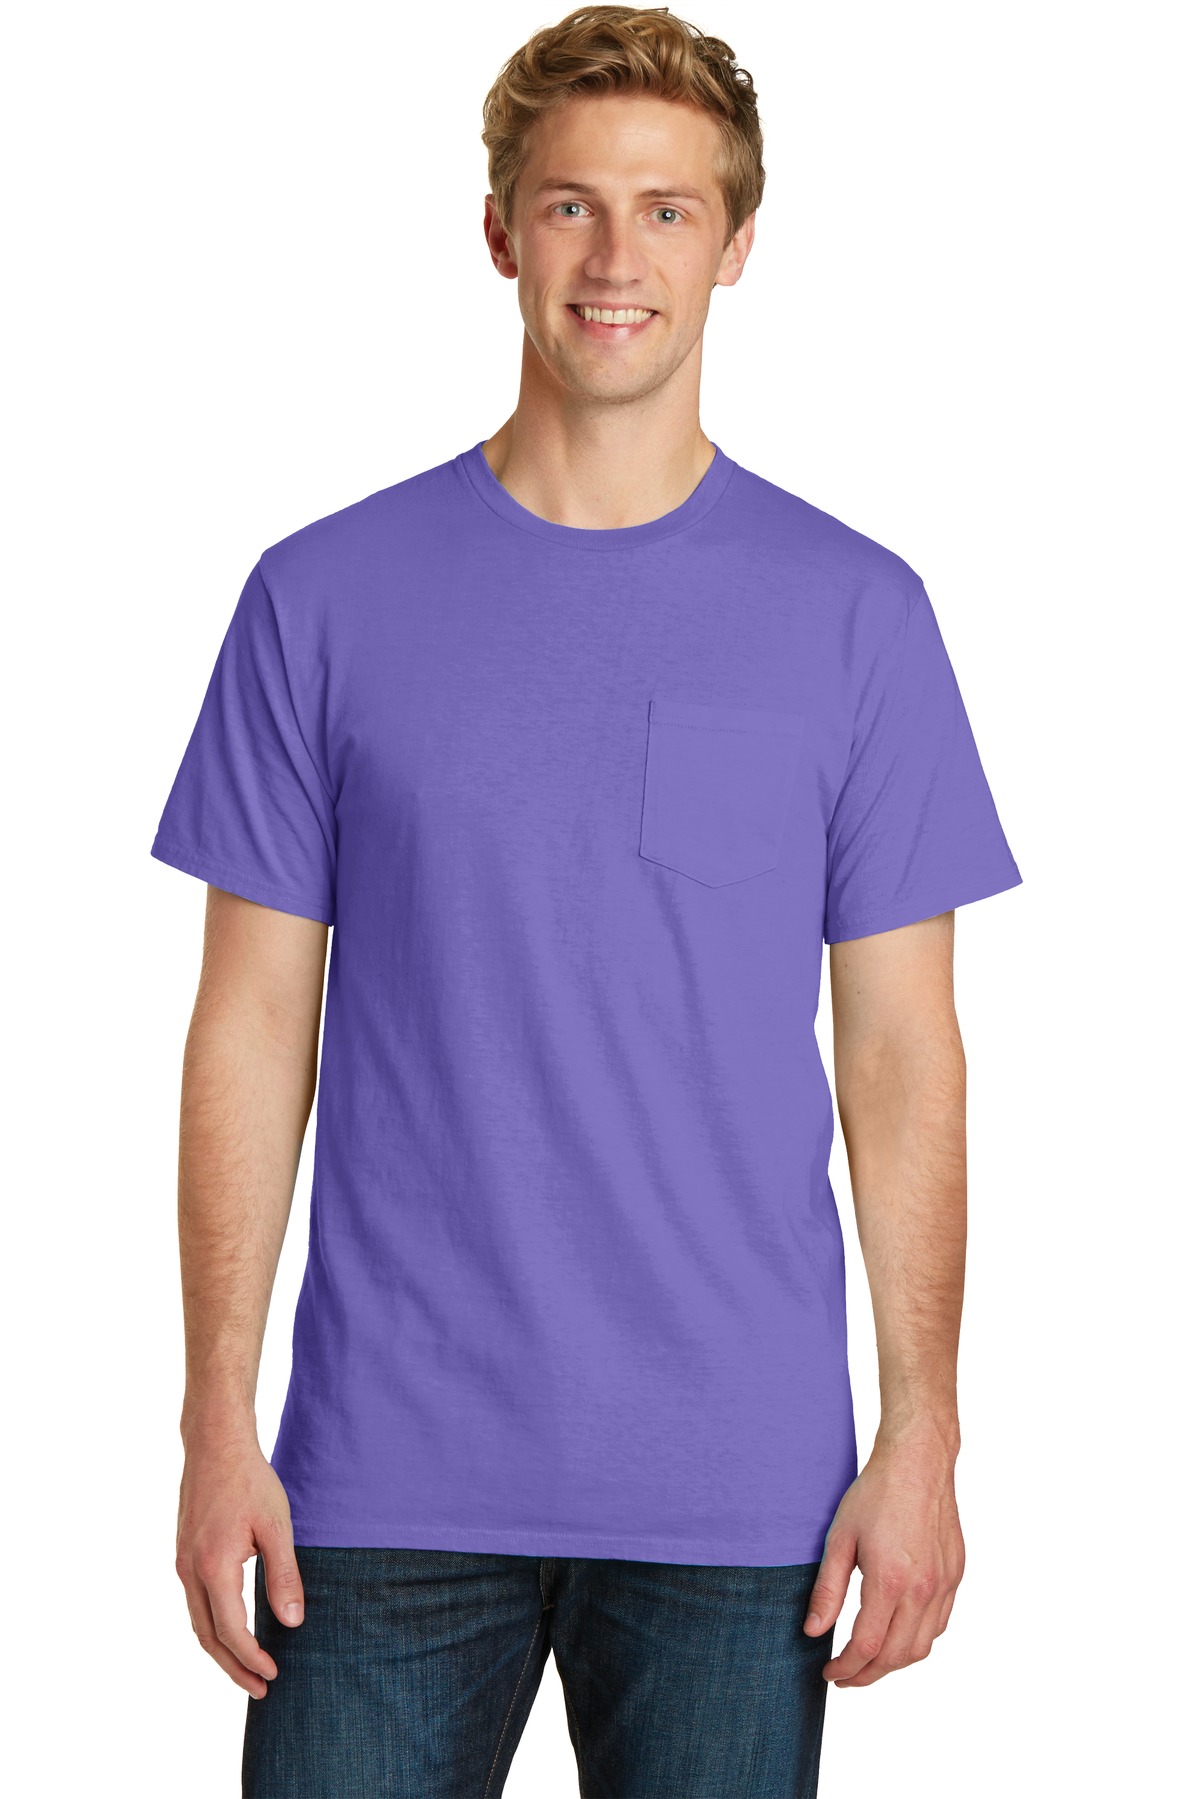 Port & Company Hospitality T-Shirts ® Beach Wash Garment-Dyed Pocket Tee.-Port & Company